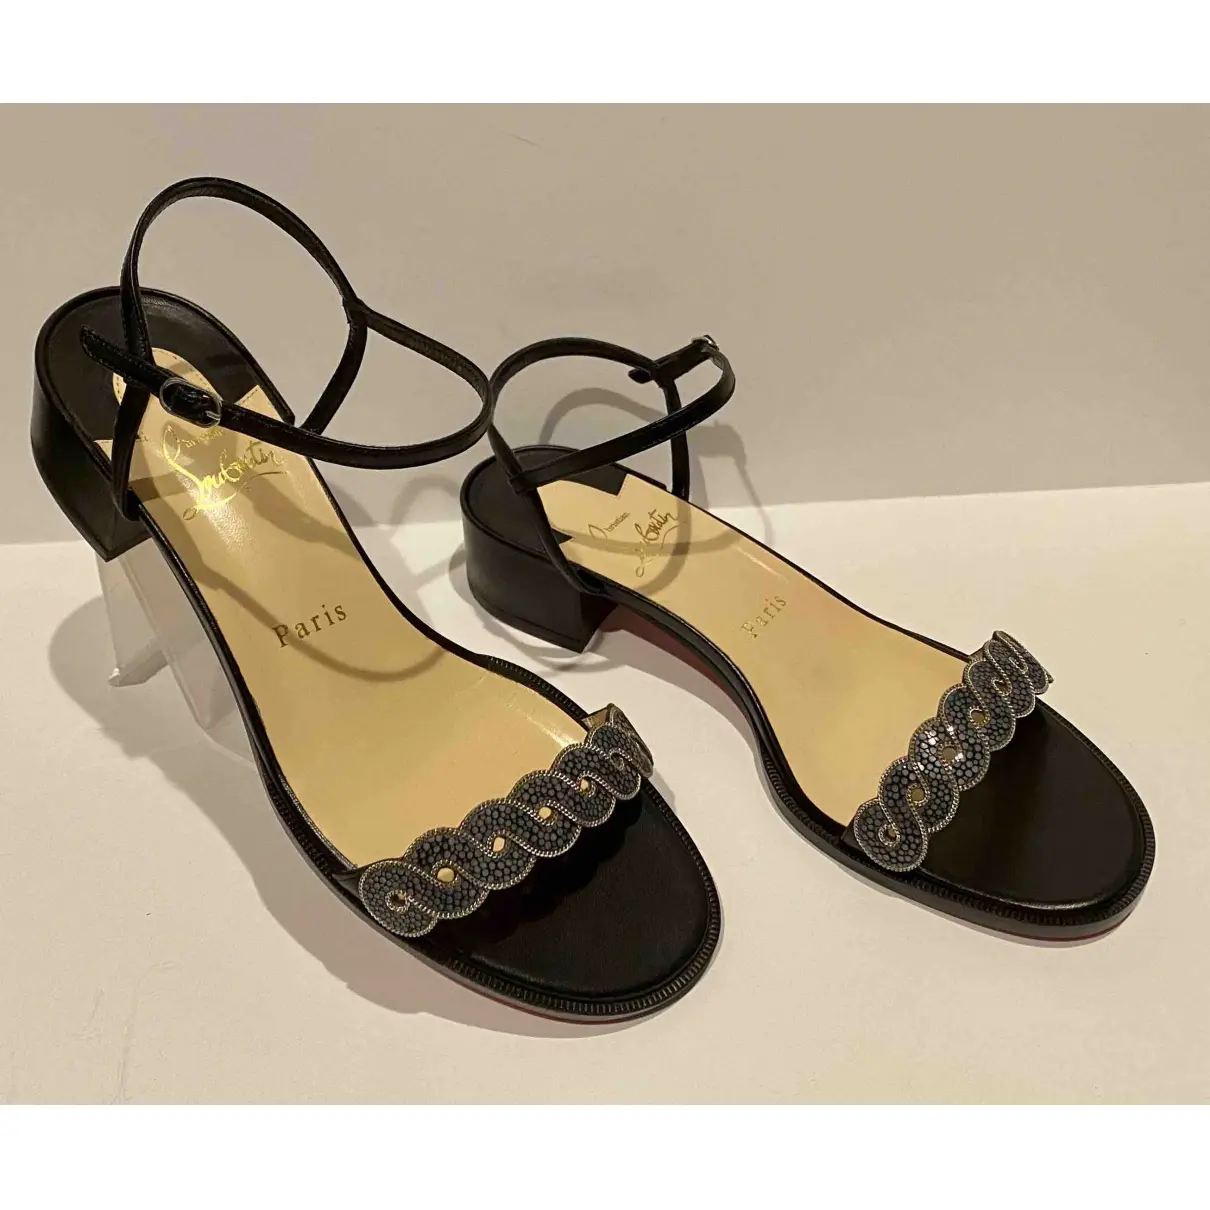 Buy Christian Louboutin Leather sandal online